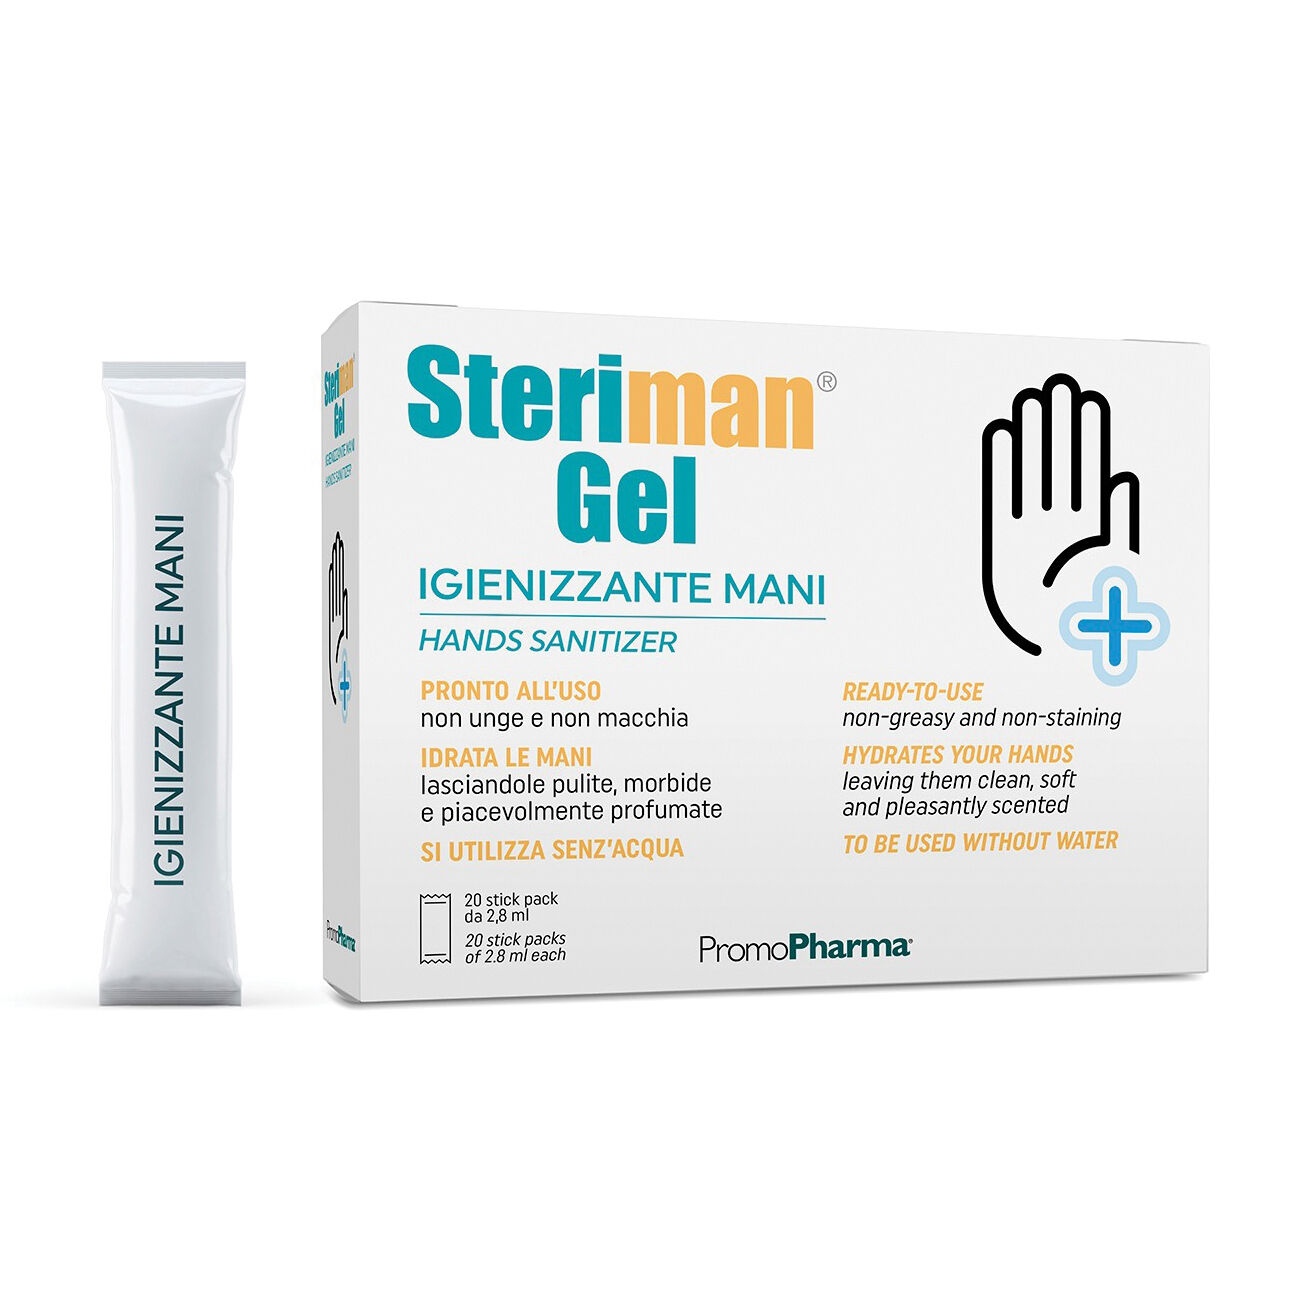 PROMOPHARMA Steriman gel igienizzante mani 20 stick da 2,8 ml